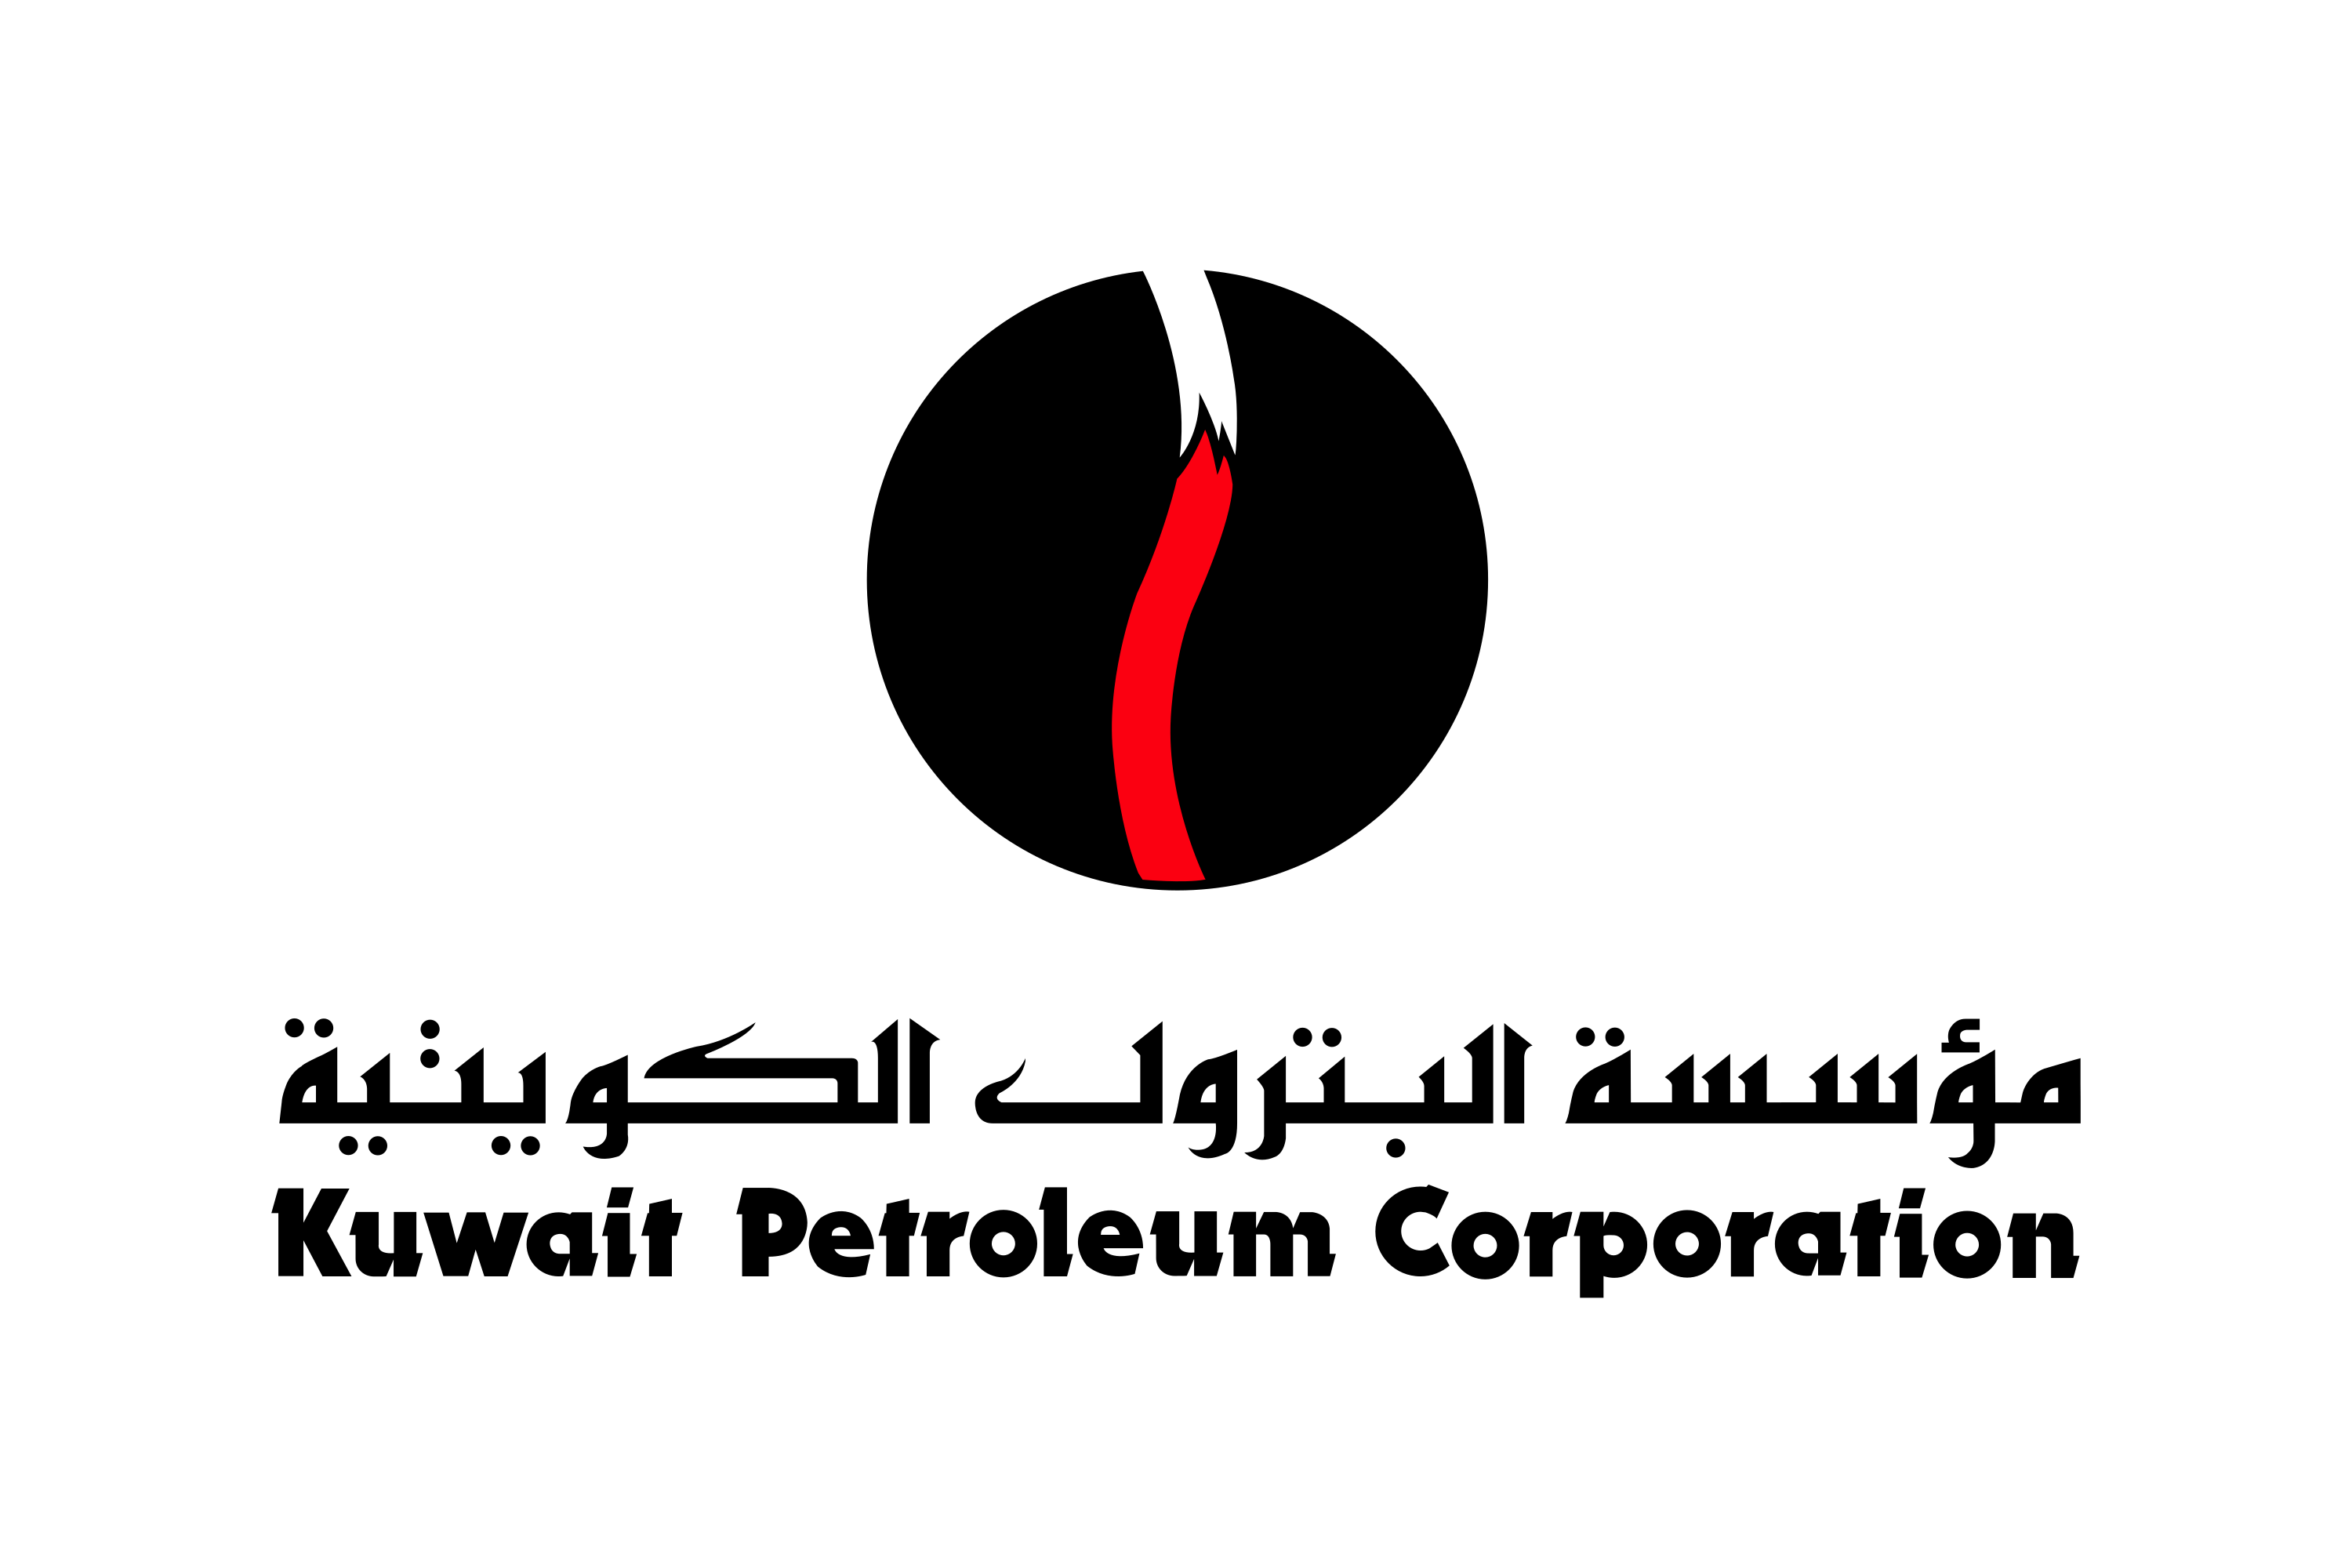 Download Kuwait Petroleum Corporation Logo in SVG Vector or PNG File